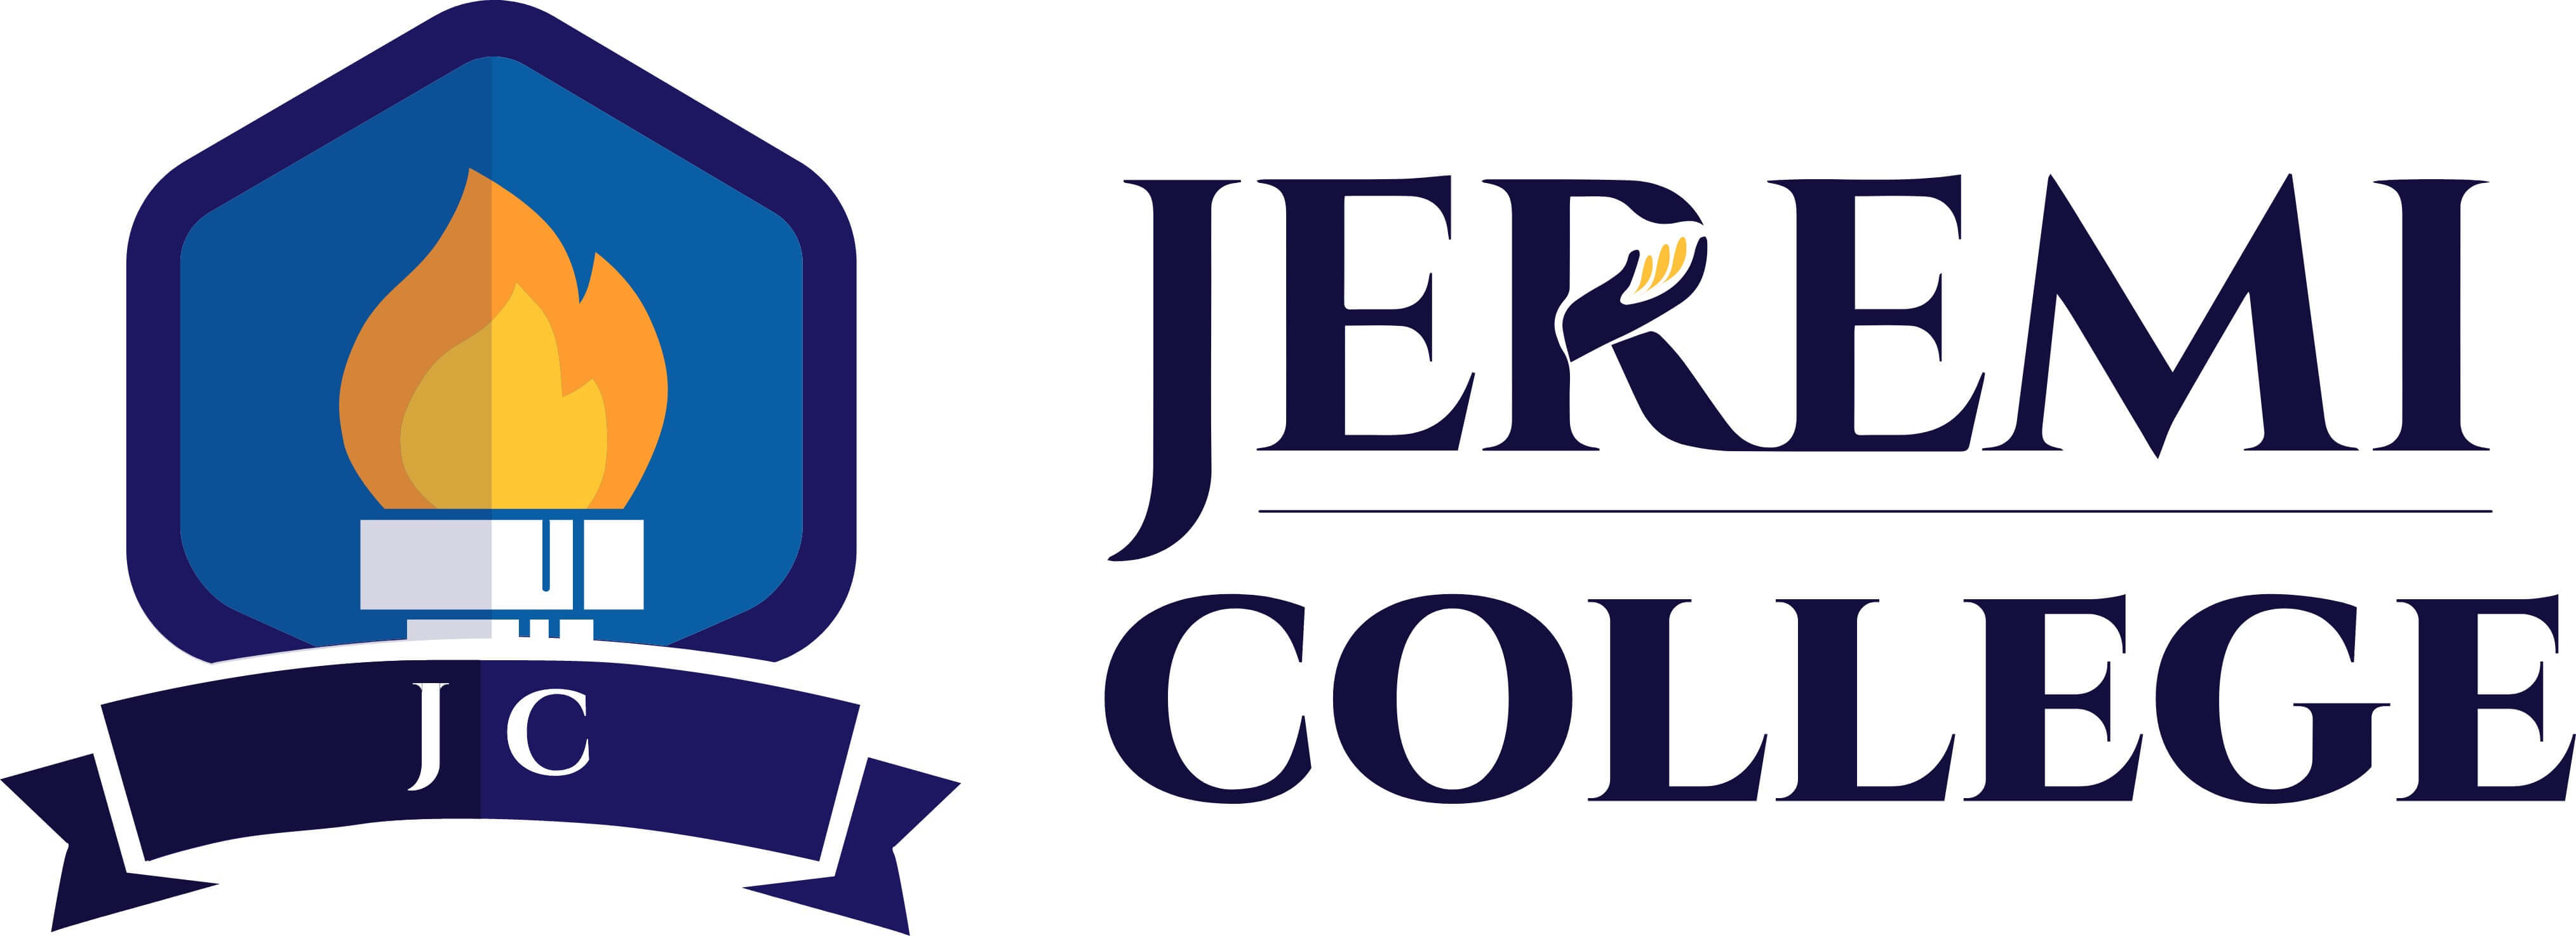 Jeremi college